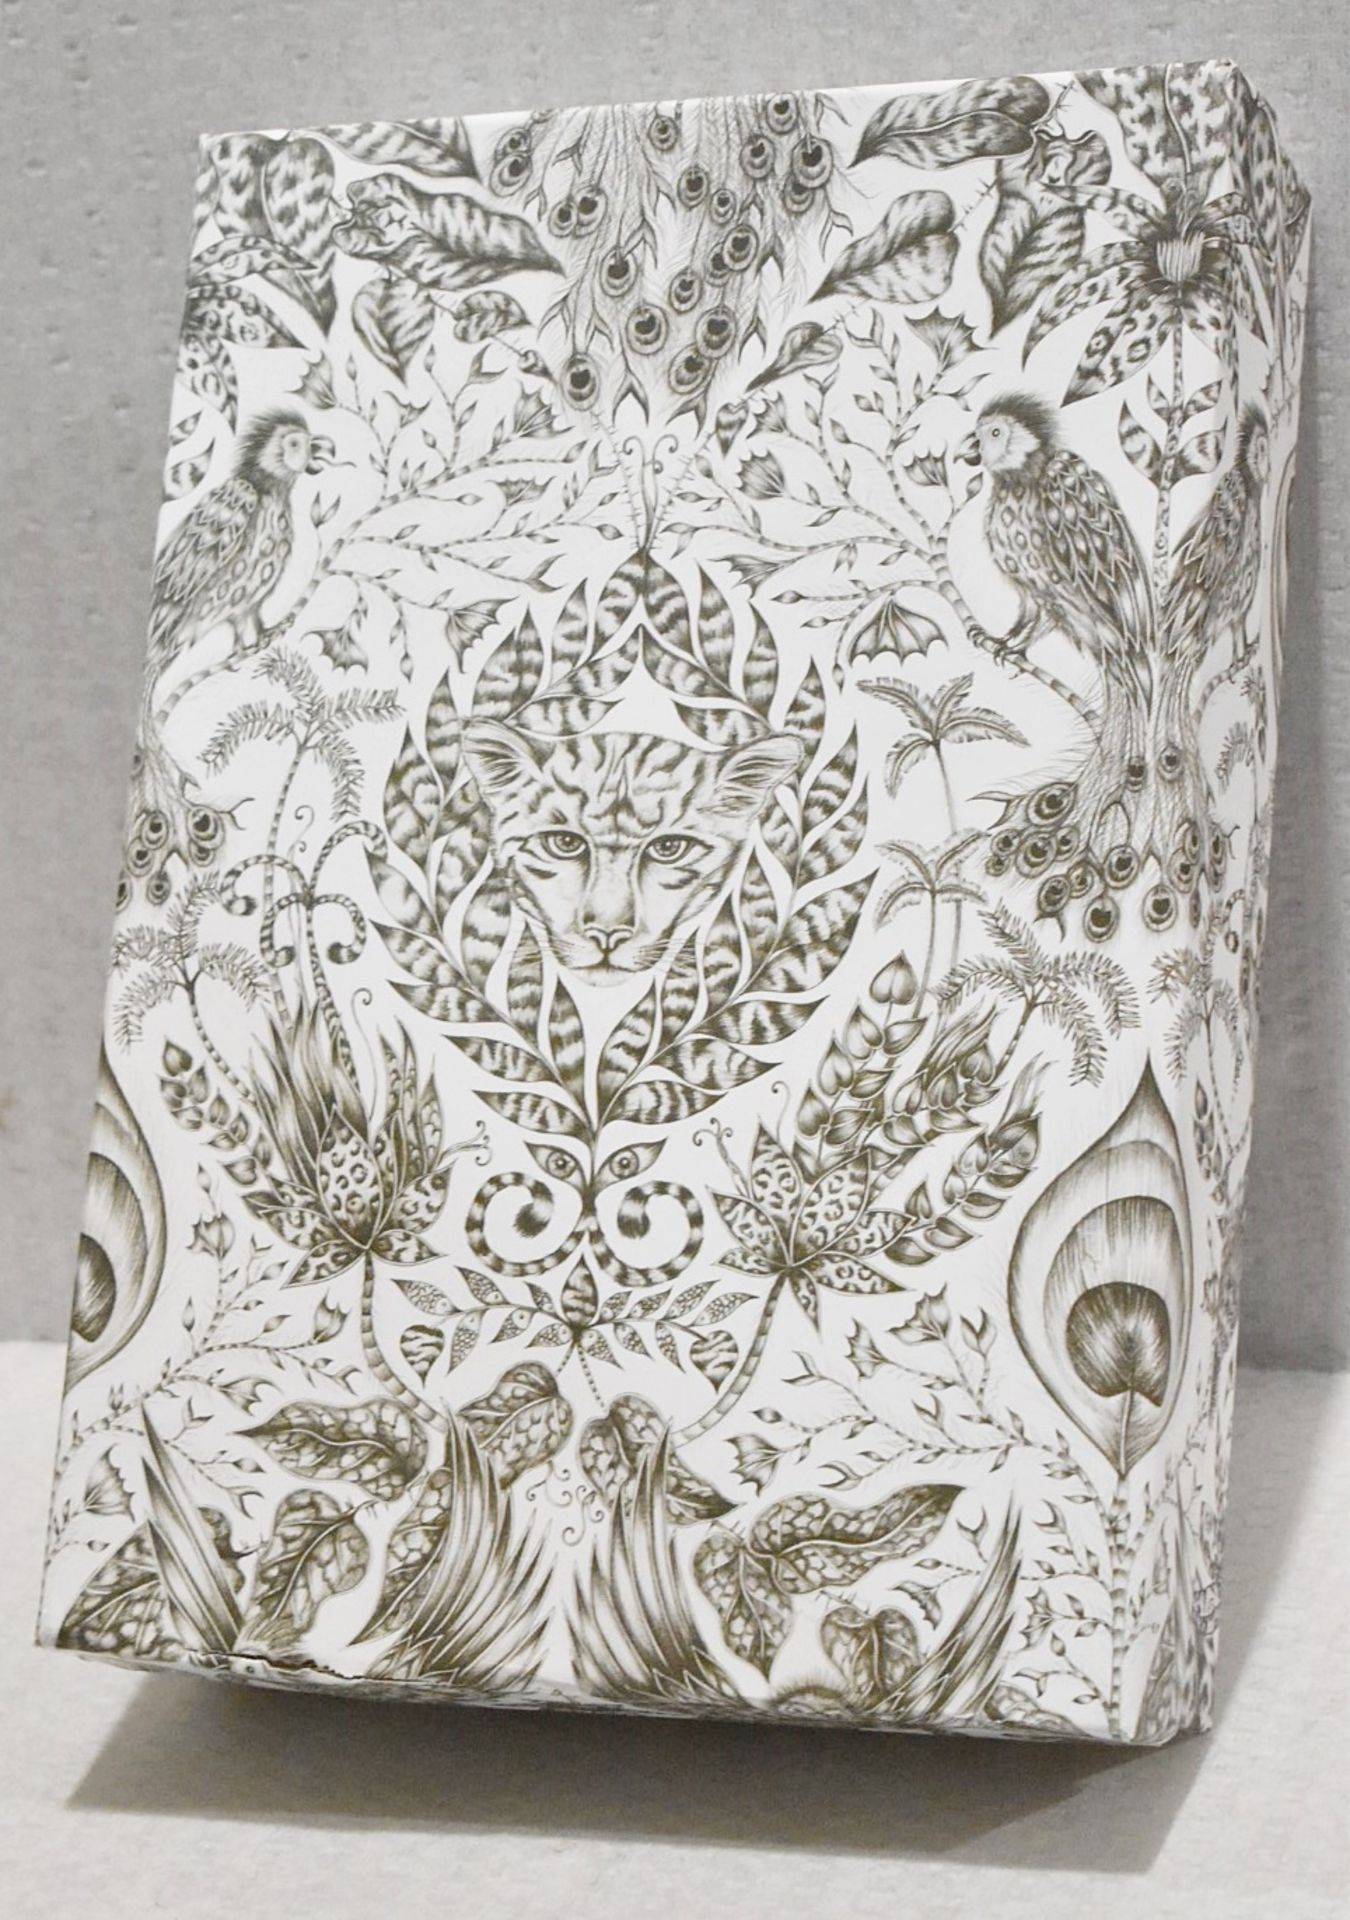 1 x EMMA J SHIPLEY 'Lynx' Designer Kingsize Cotton Sateen Duvet Cover (230cm x 220cm) - RRP £180.00 - Image 2 of 7